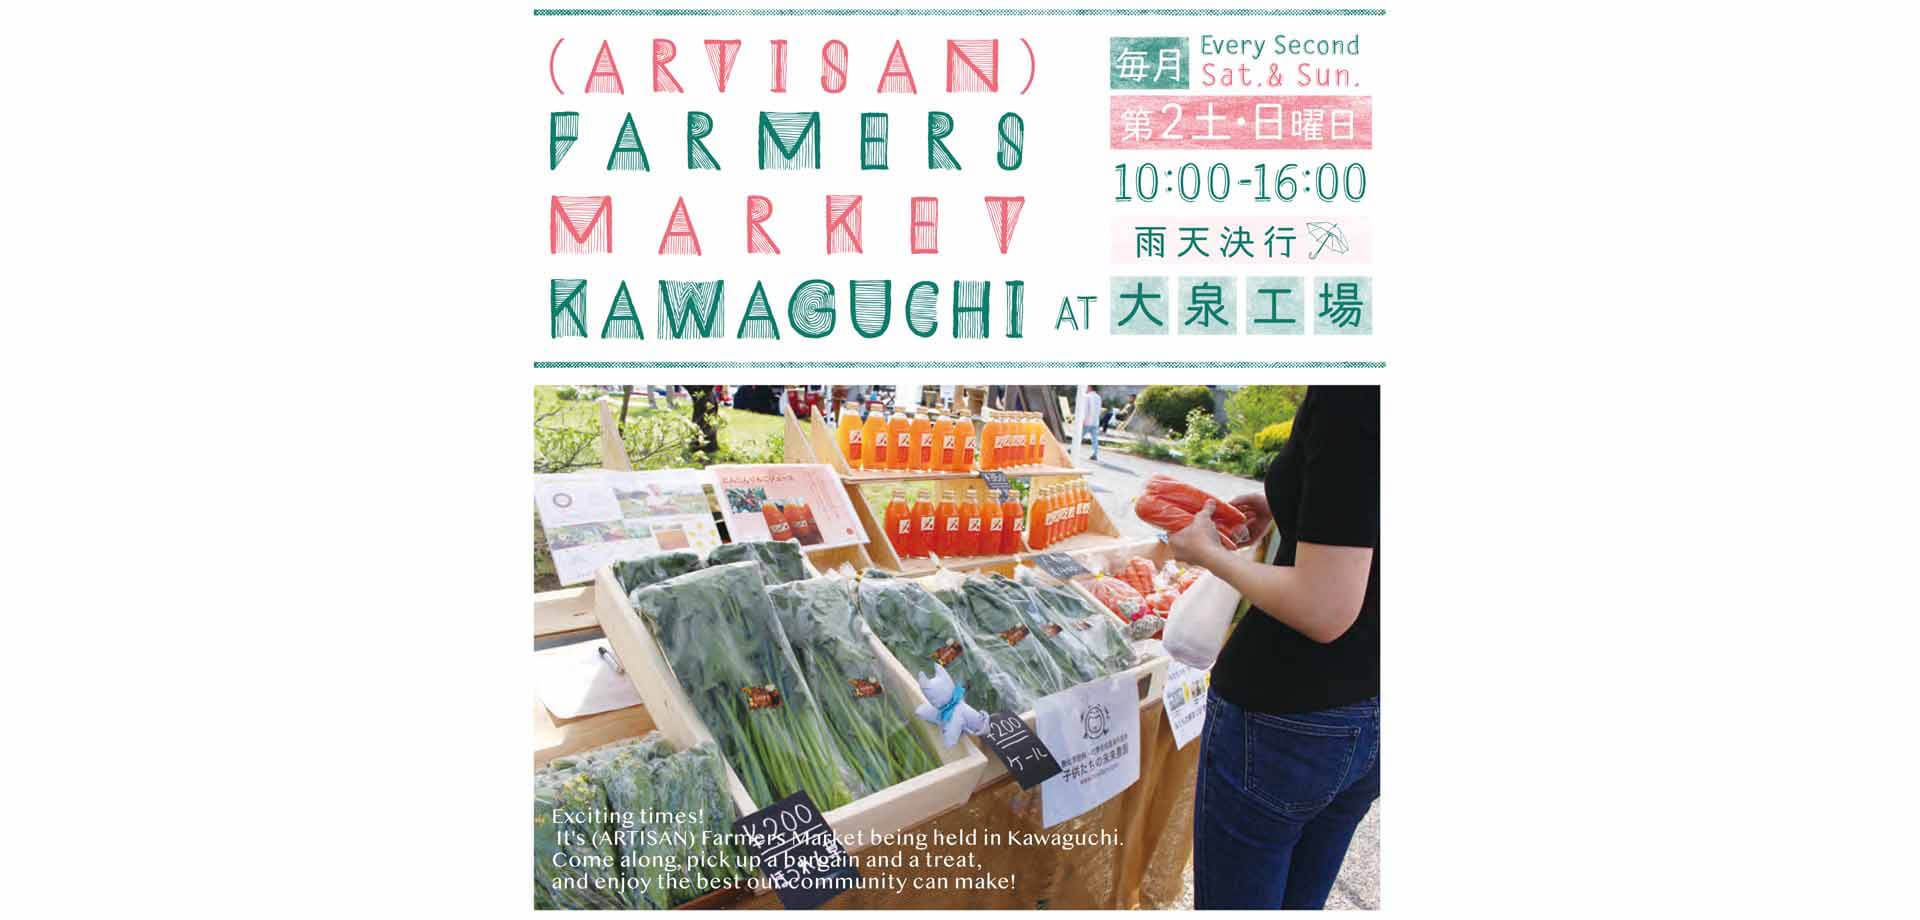 “(ARTISAN) FARMERS MARKET KAWAGUCHI” 大泉工場